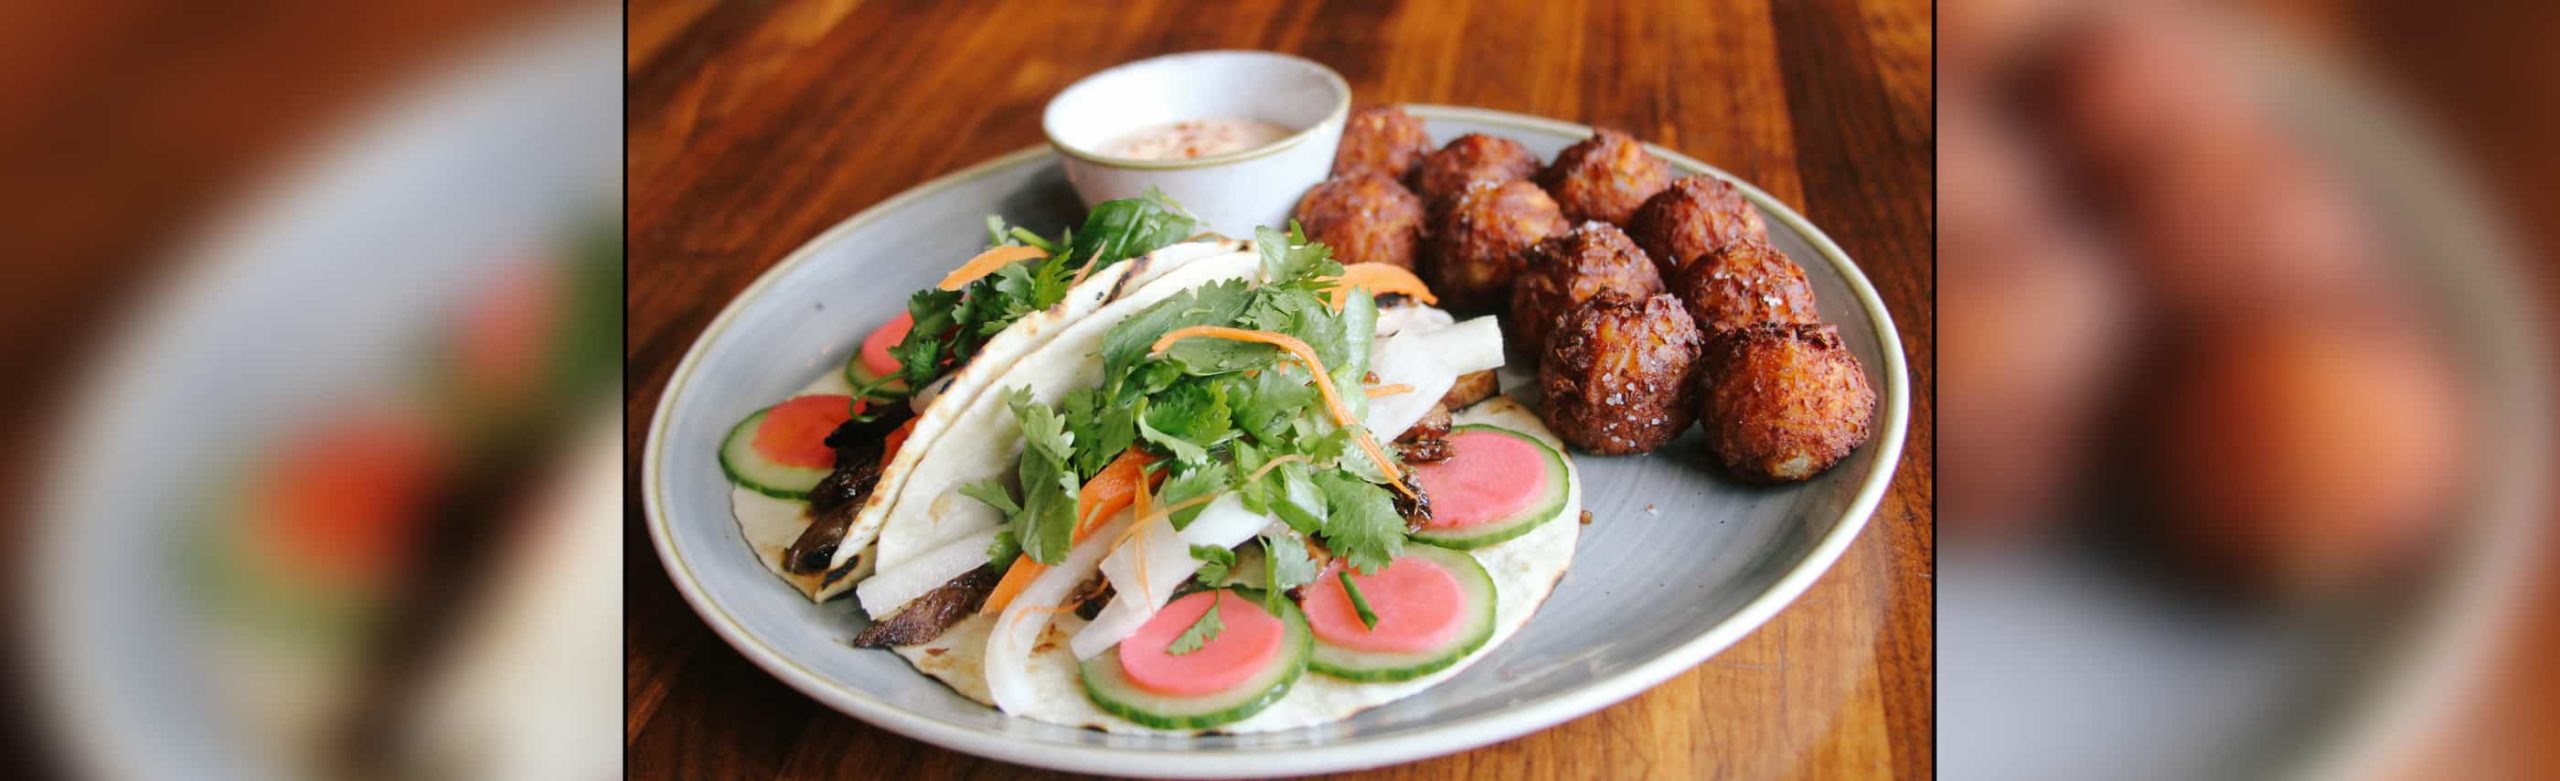 Menu Update: Top Hat Restaurant Adds Vegan Dishes, Returning Classics and More Image